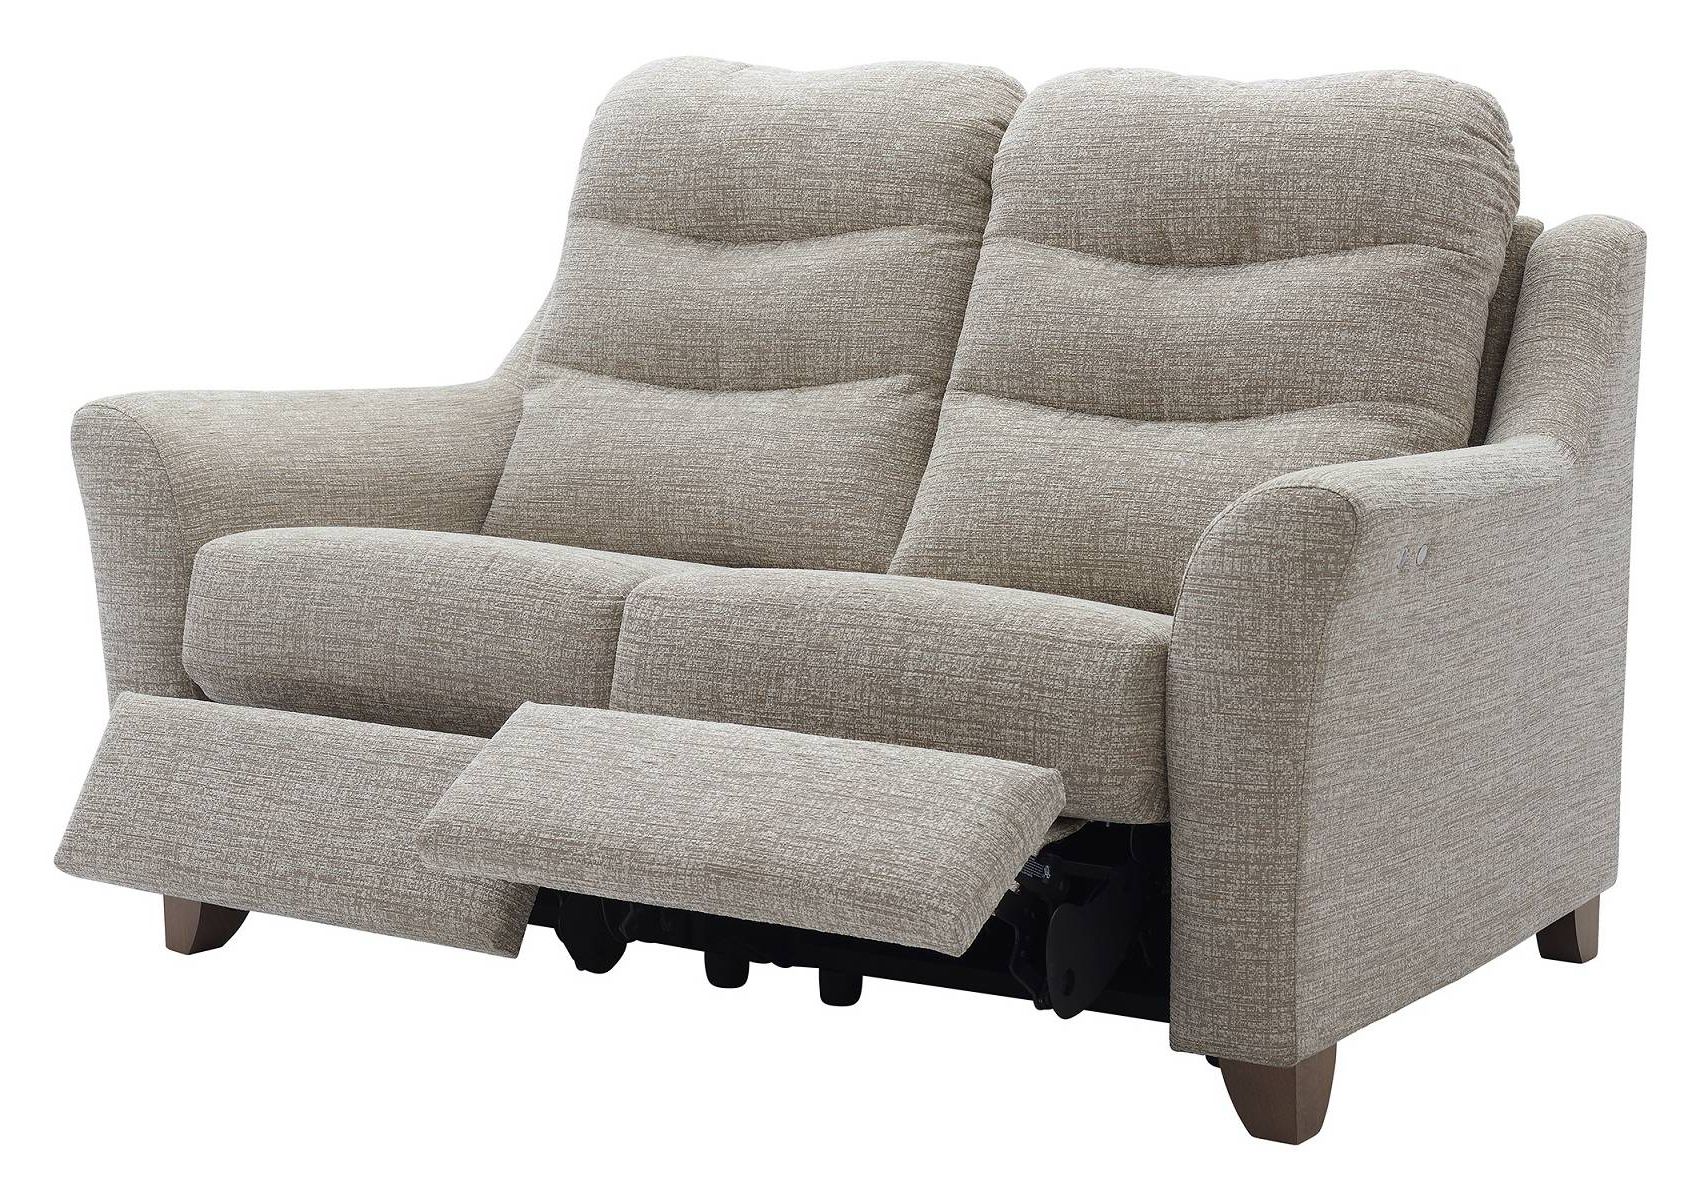 Newest Tate Ii Sofa Chairs Regarding G Plan Tate Fixed & Recliner Sofa (View 10 of 20)